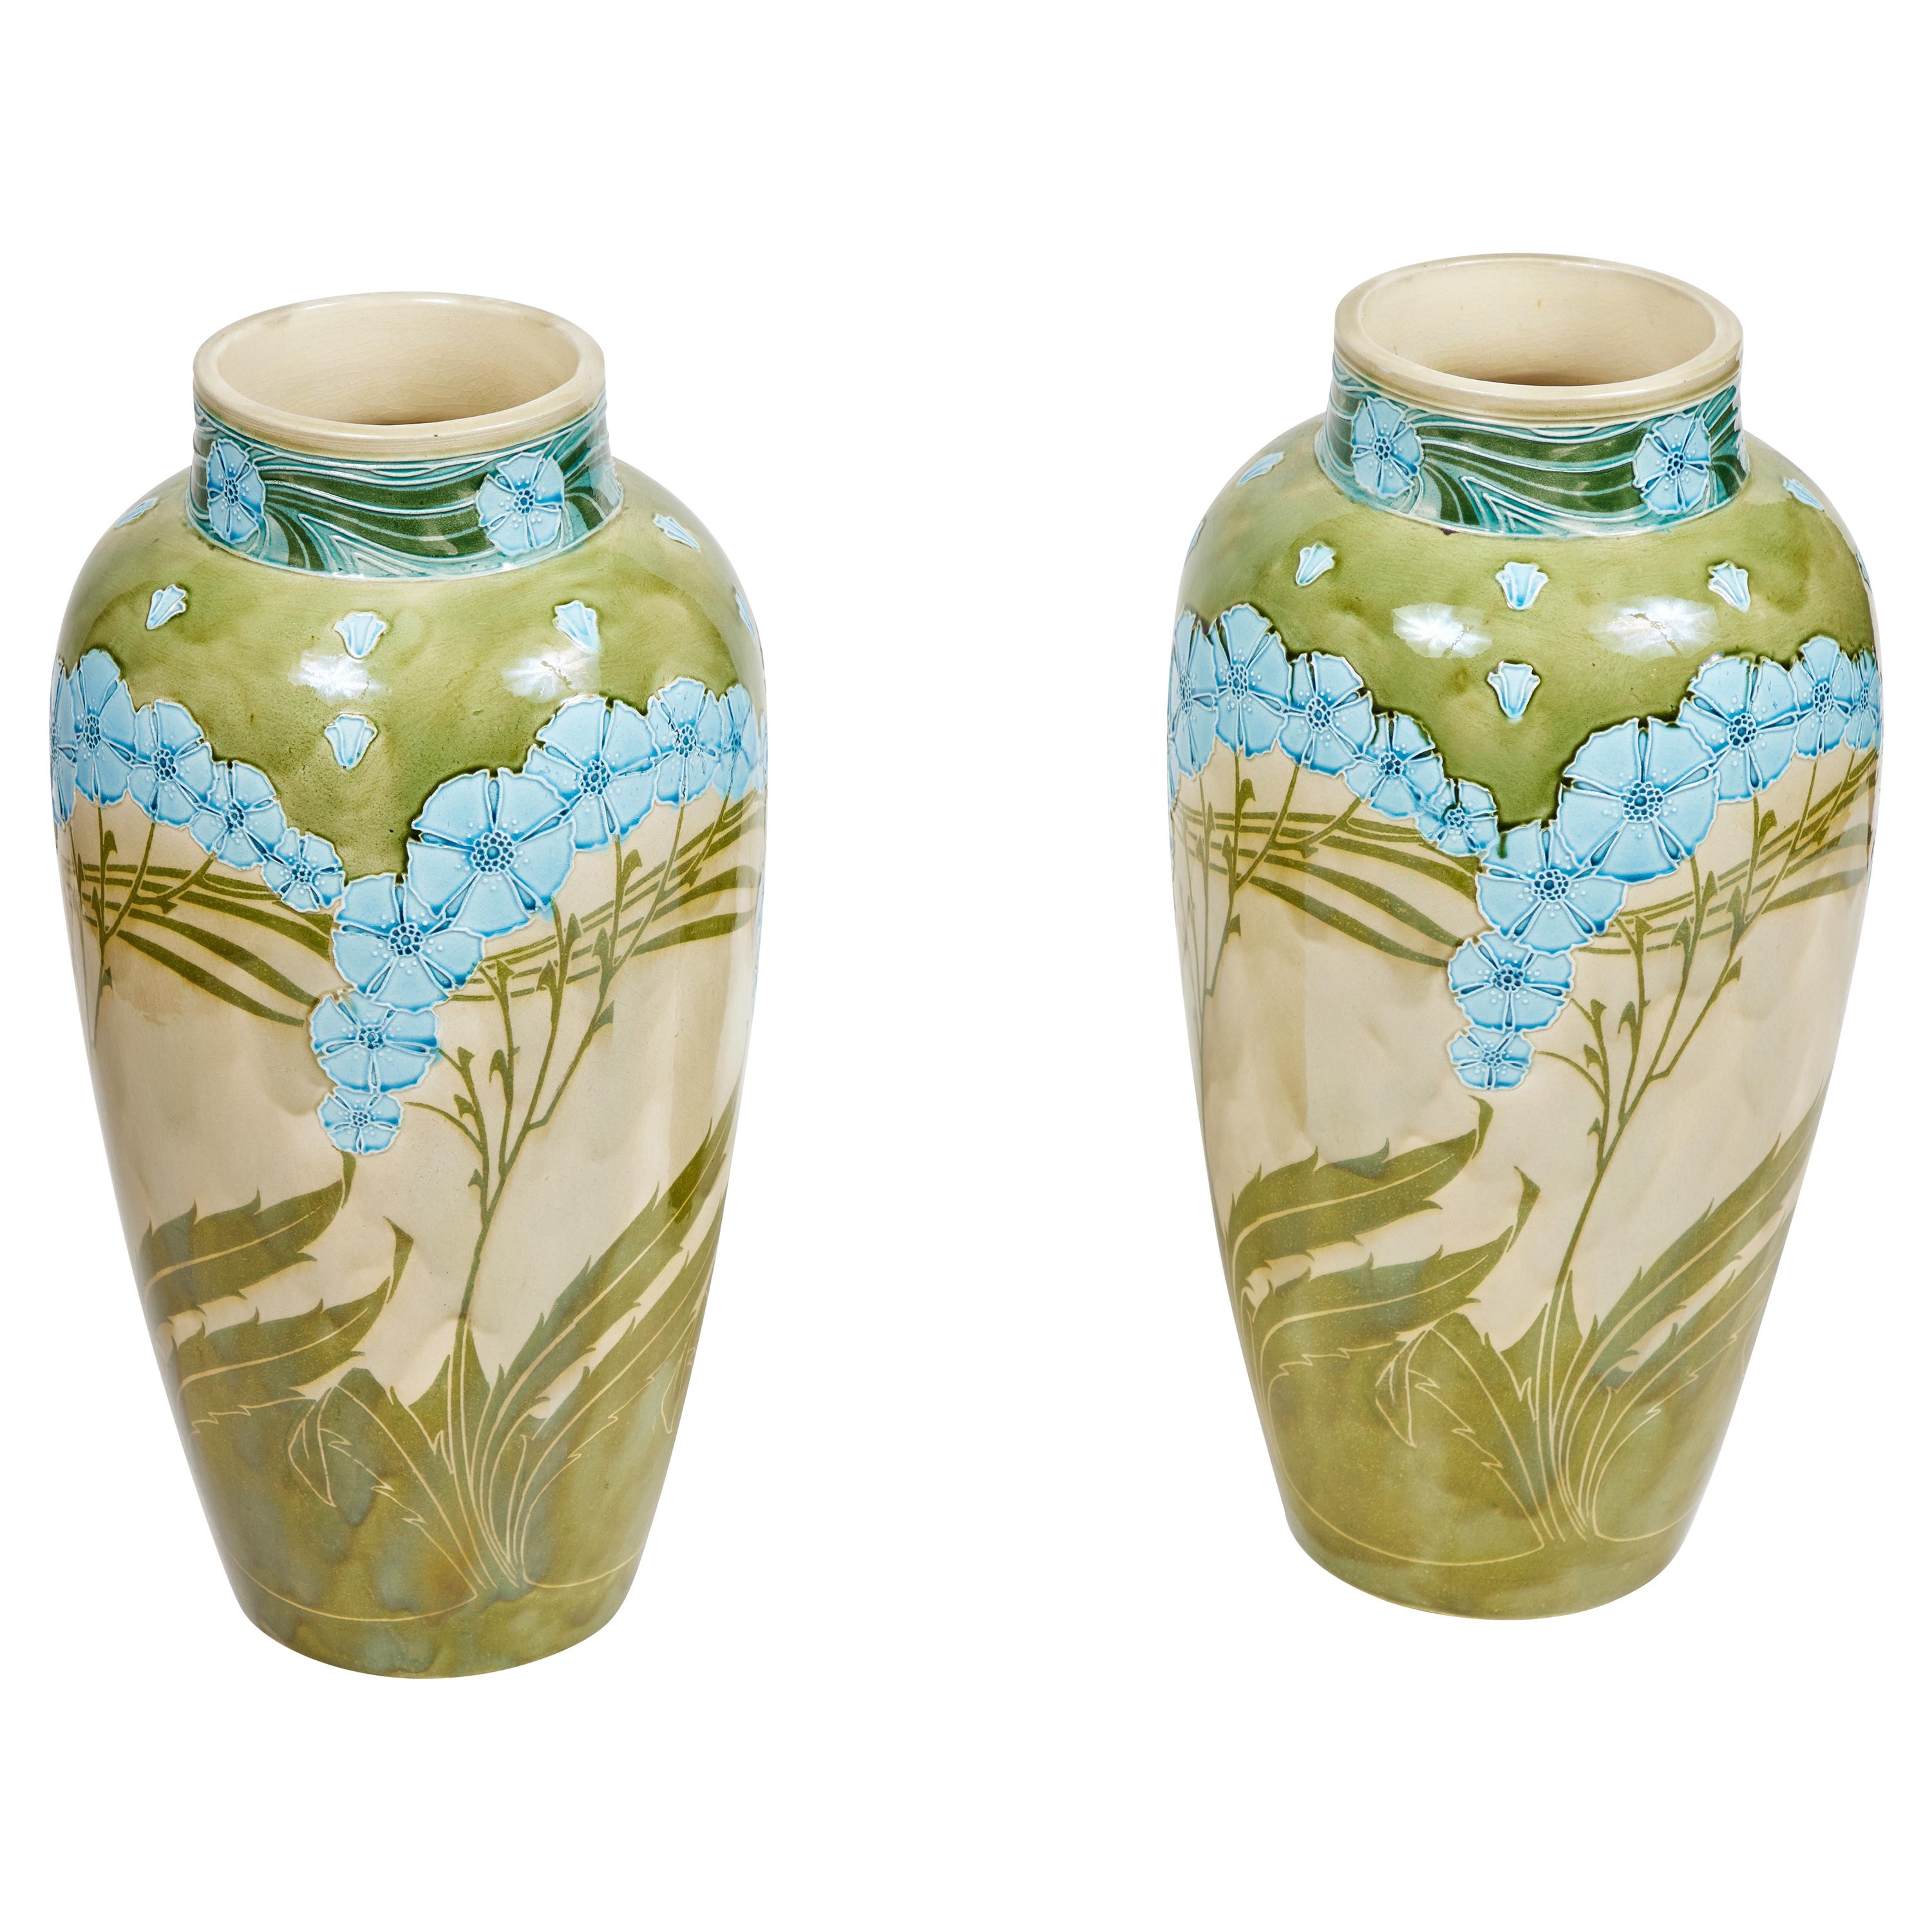 Pair of Stamped, Mintons Vases